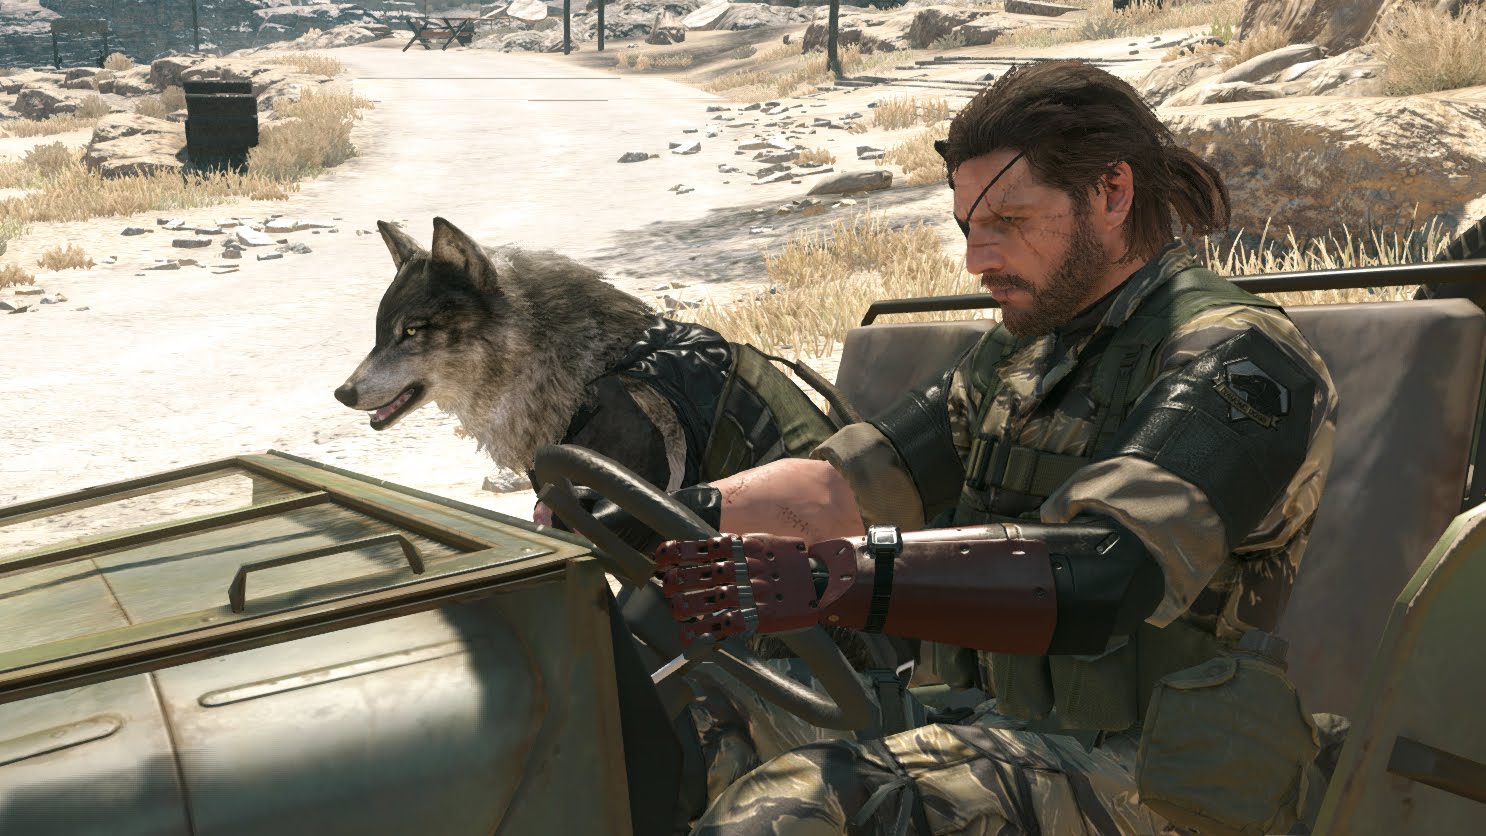 Metal Gear Solid V: The Phantom Pain HD wallpapers, Desktop wallpaper - most viewed